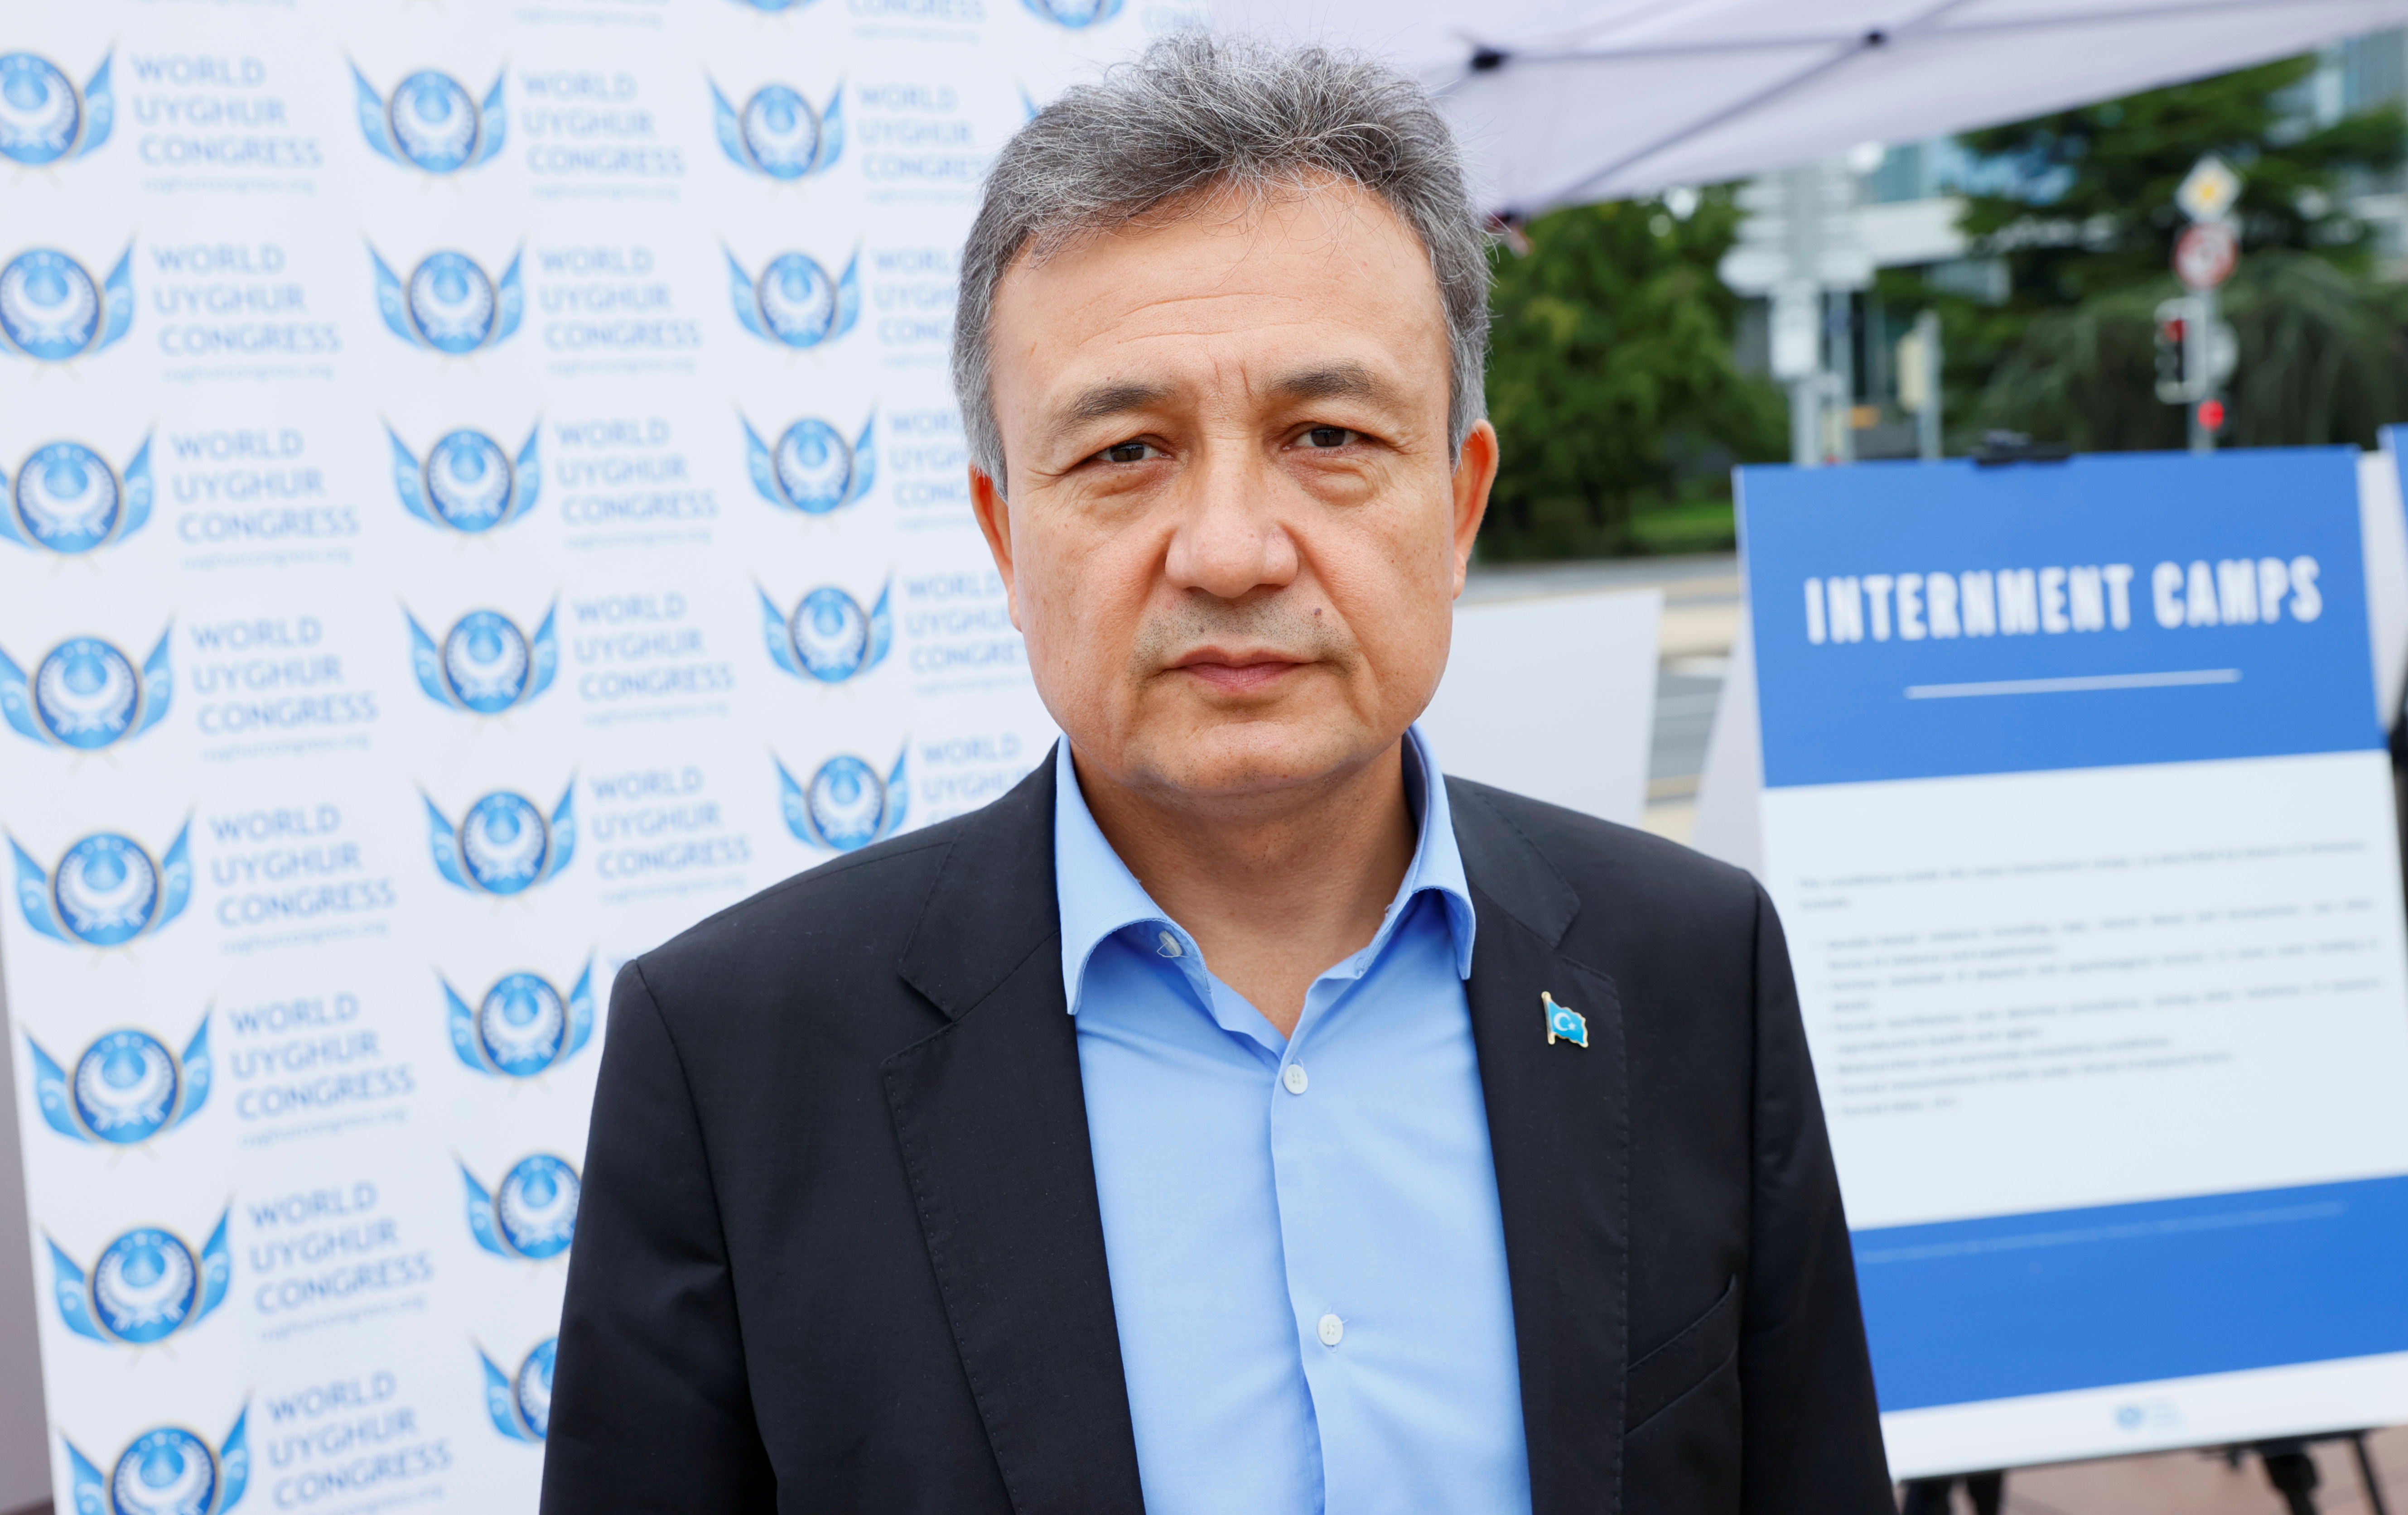 Uyghur photo exhibit in Geneva